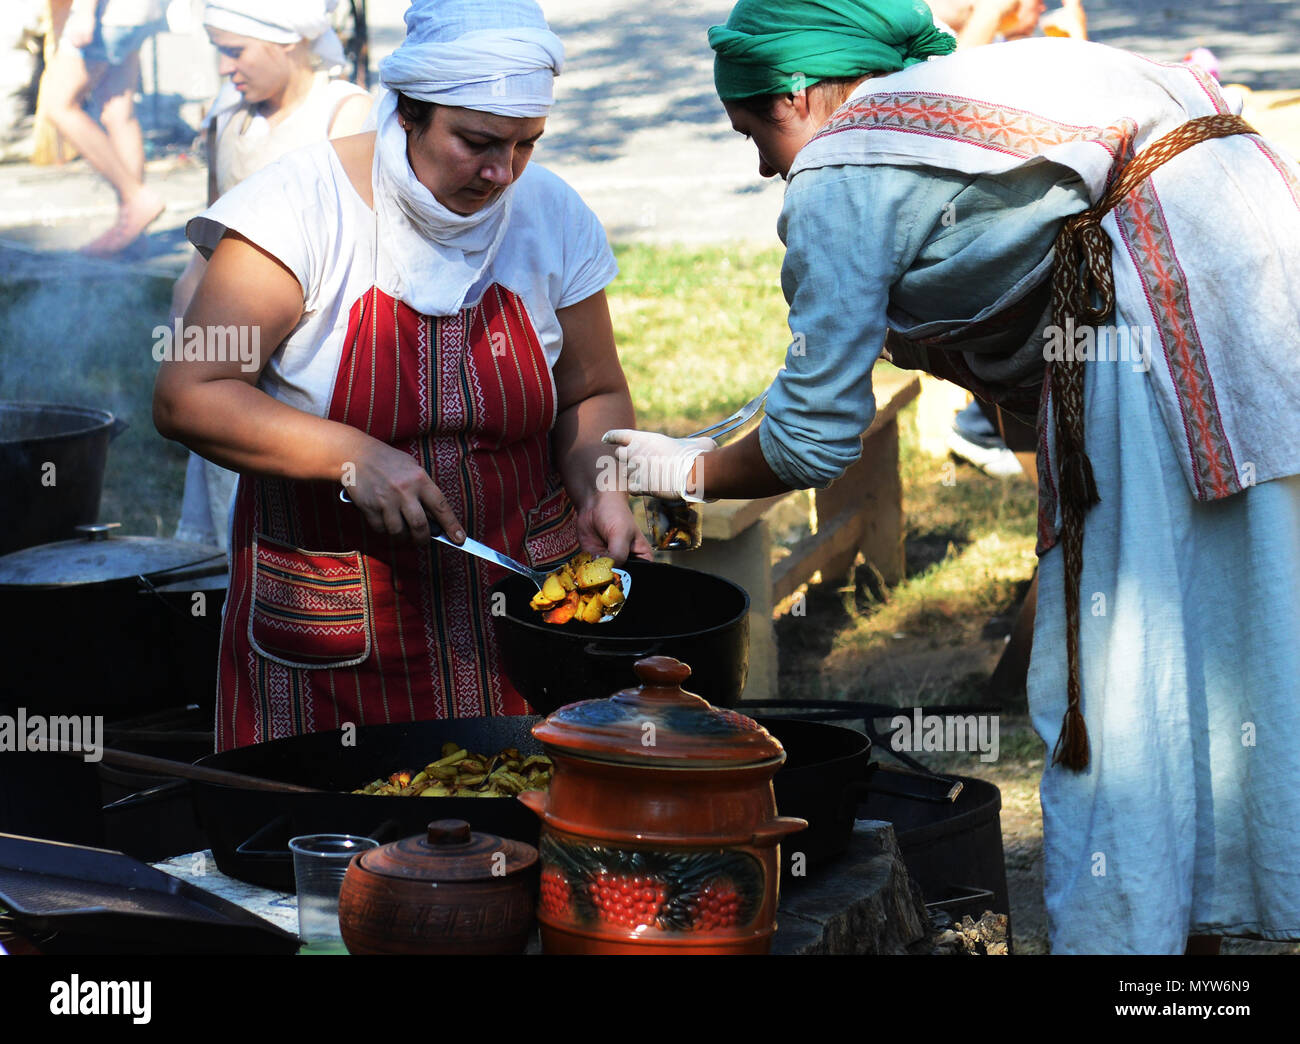 Mittelalterlich kochen im Mittelalter Festival in Odessa, Ukraine  Stockfotografie - Alamy